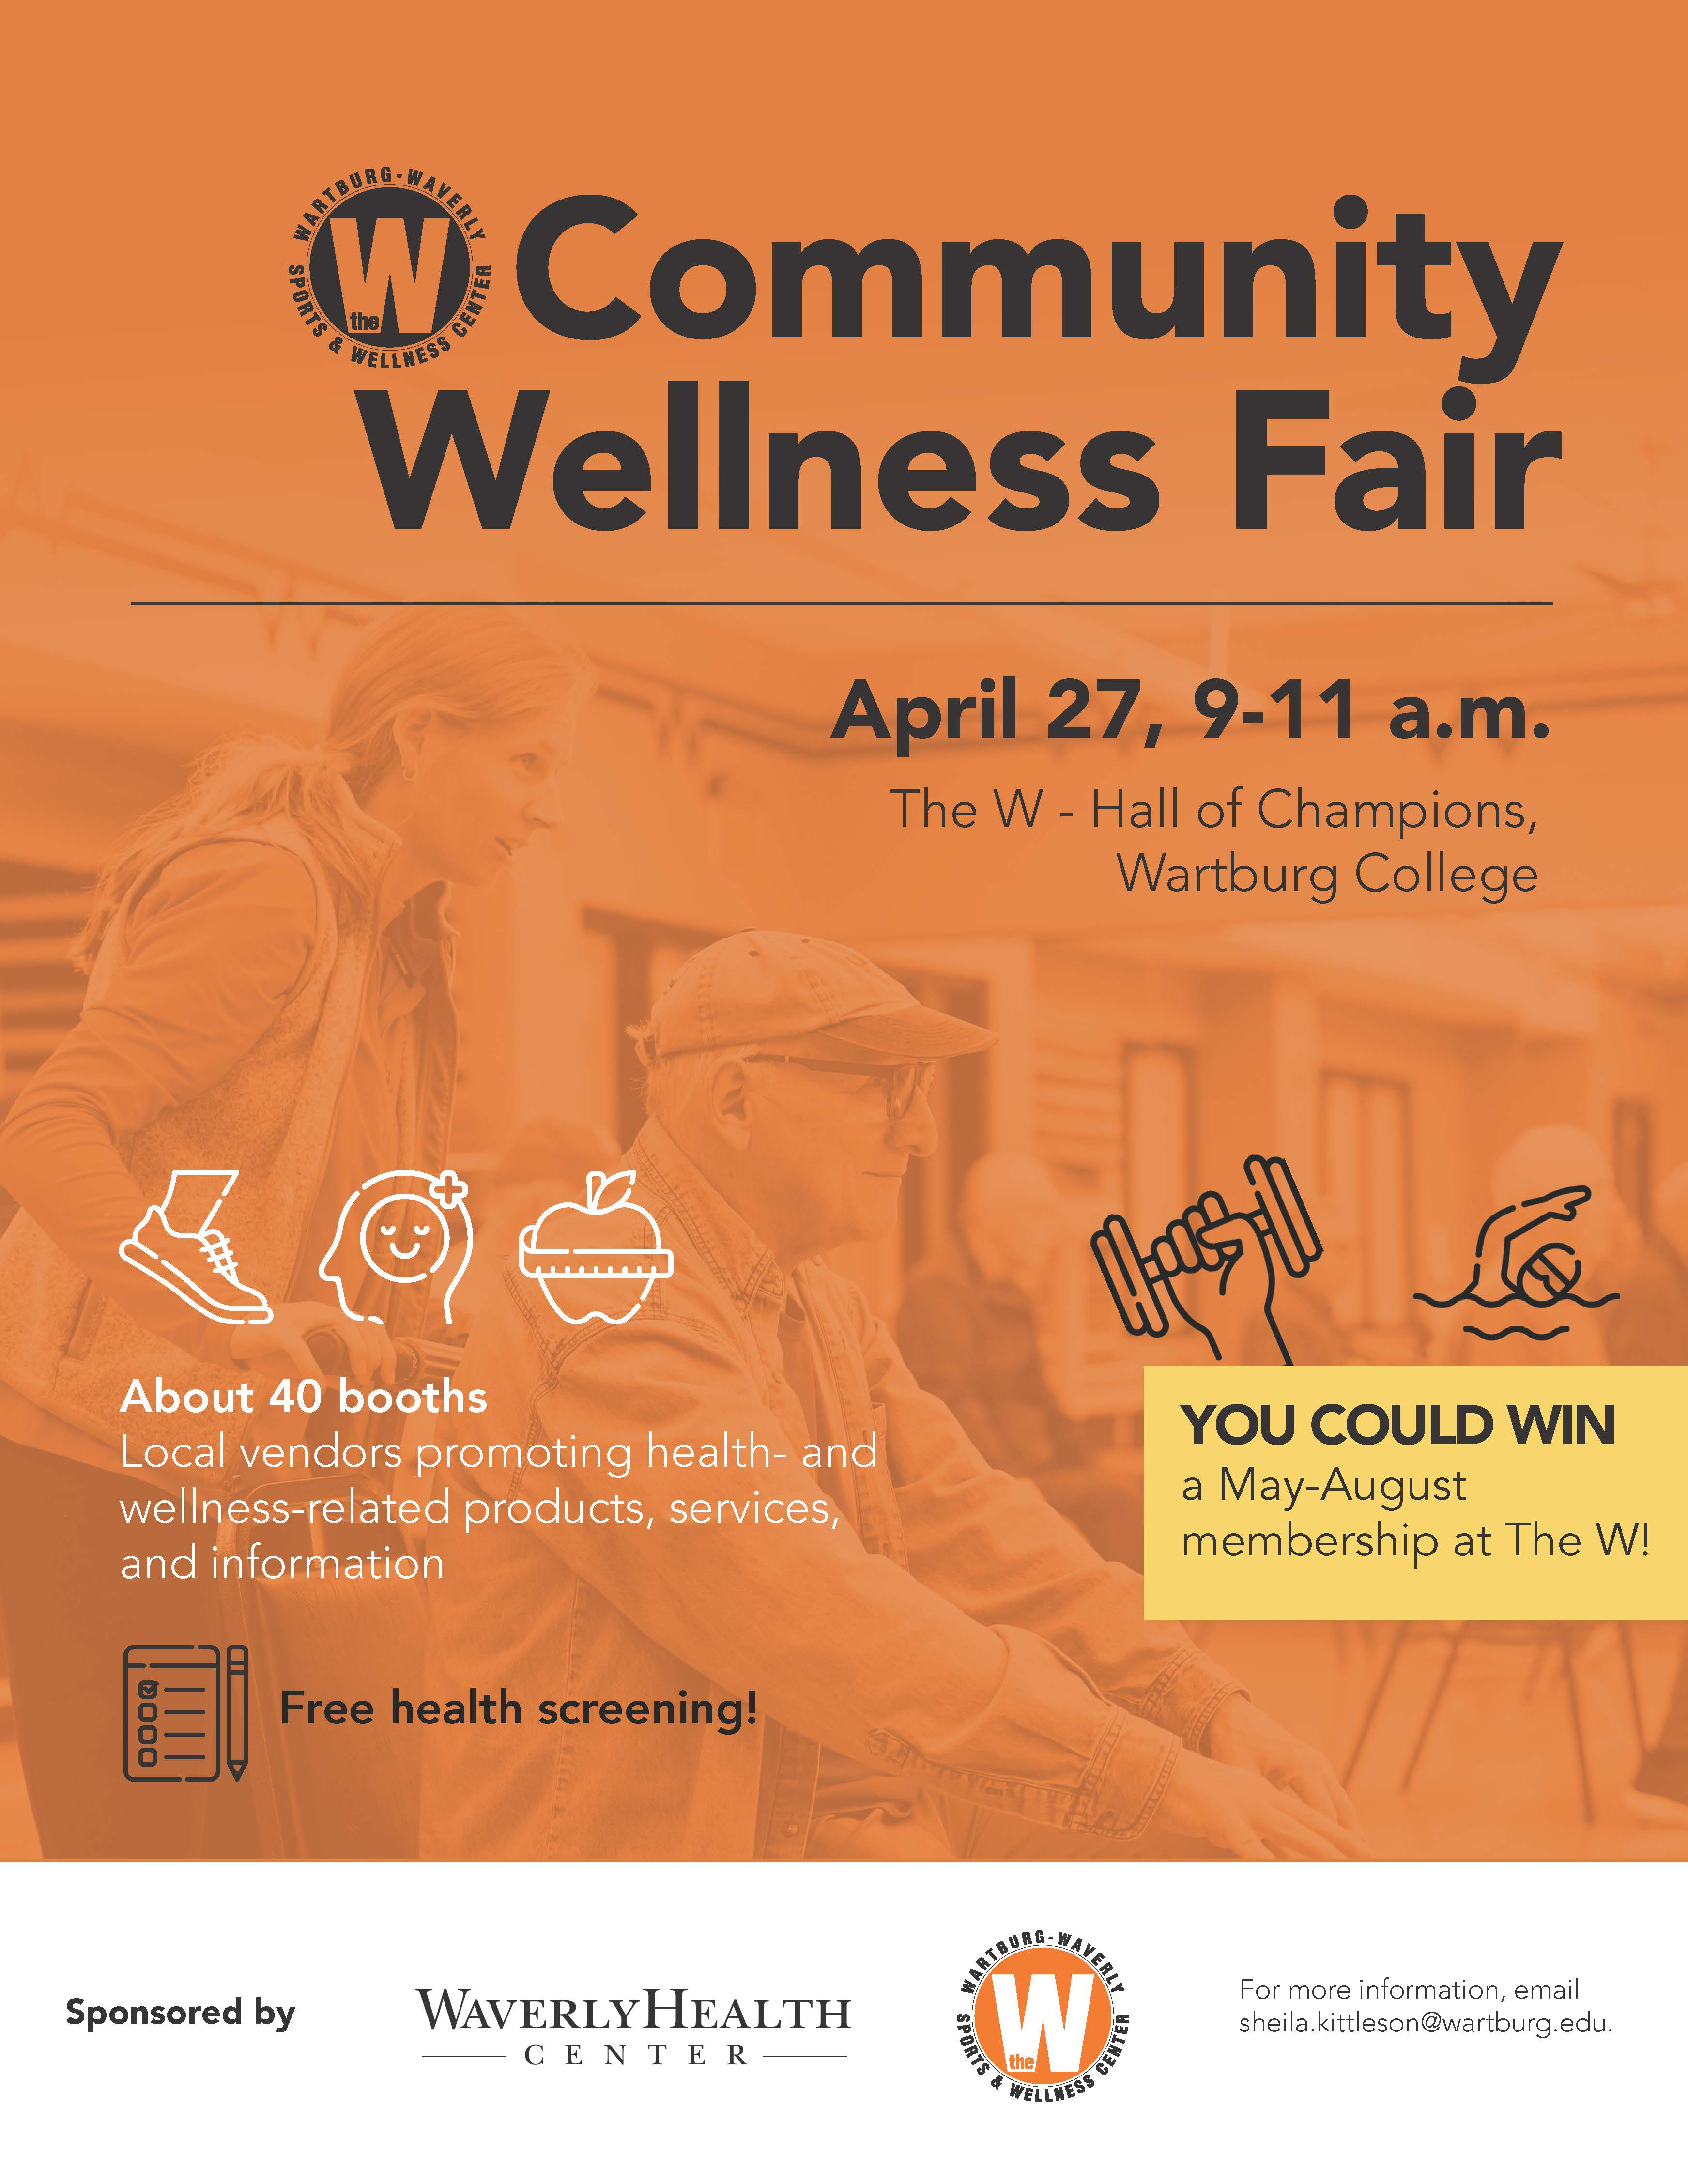 The W Community Wellness Fair Event Image